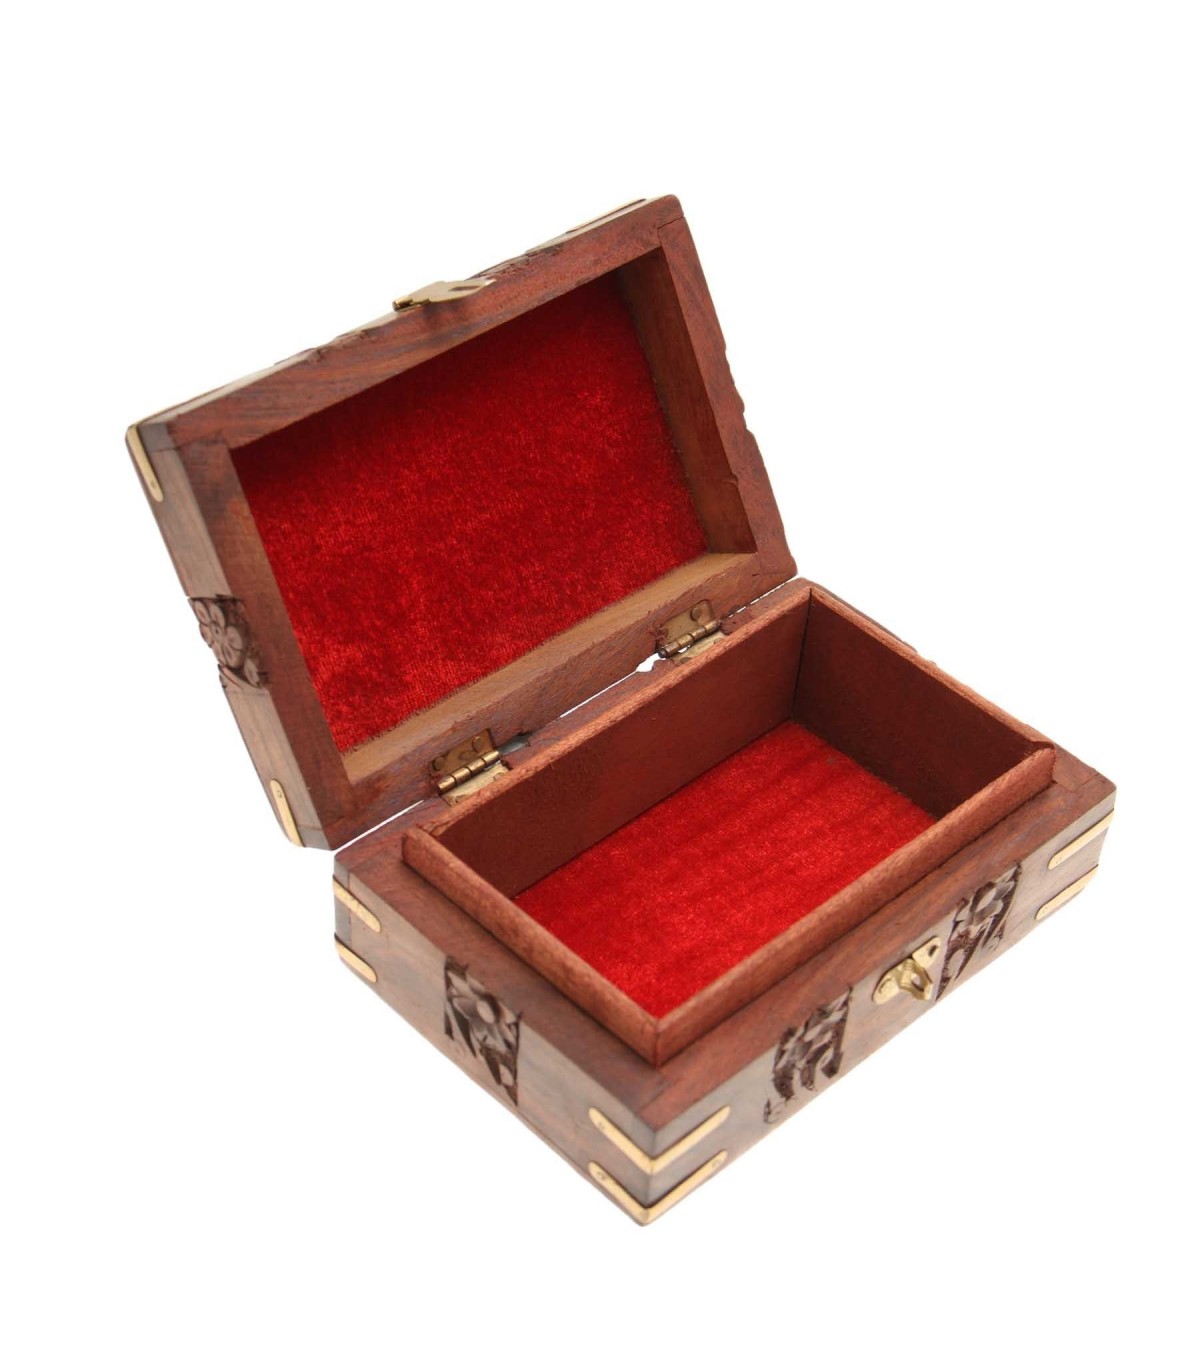 Small Wooden Boxes With Lids, Katmandu